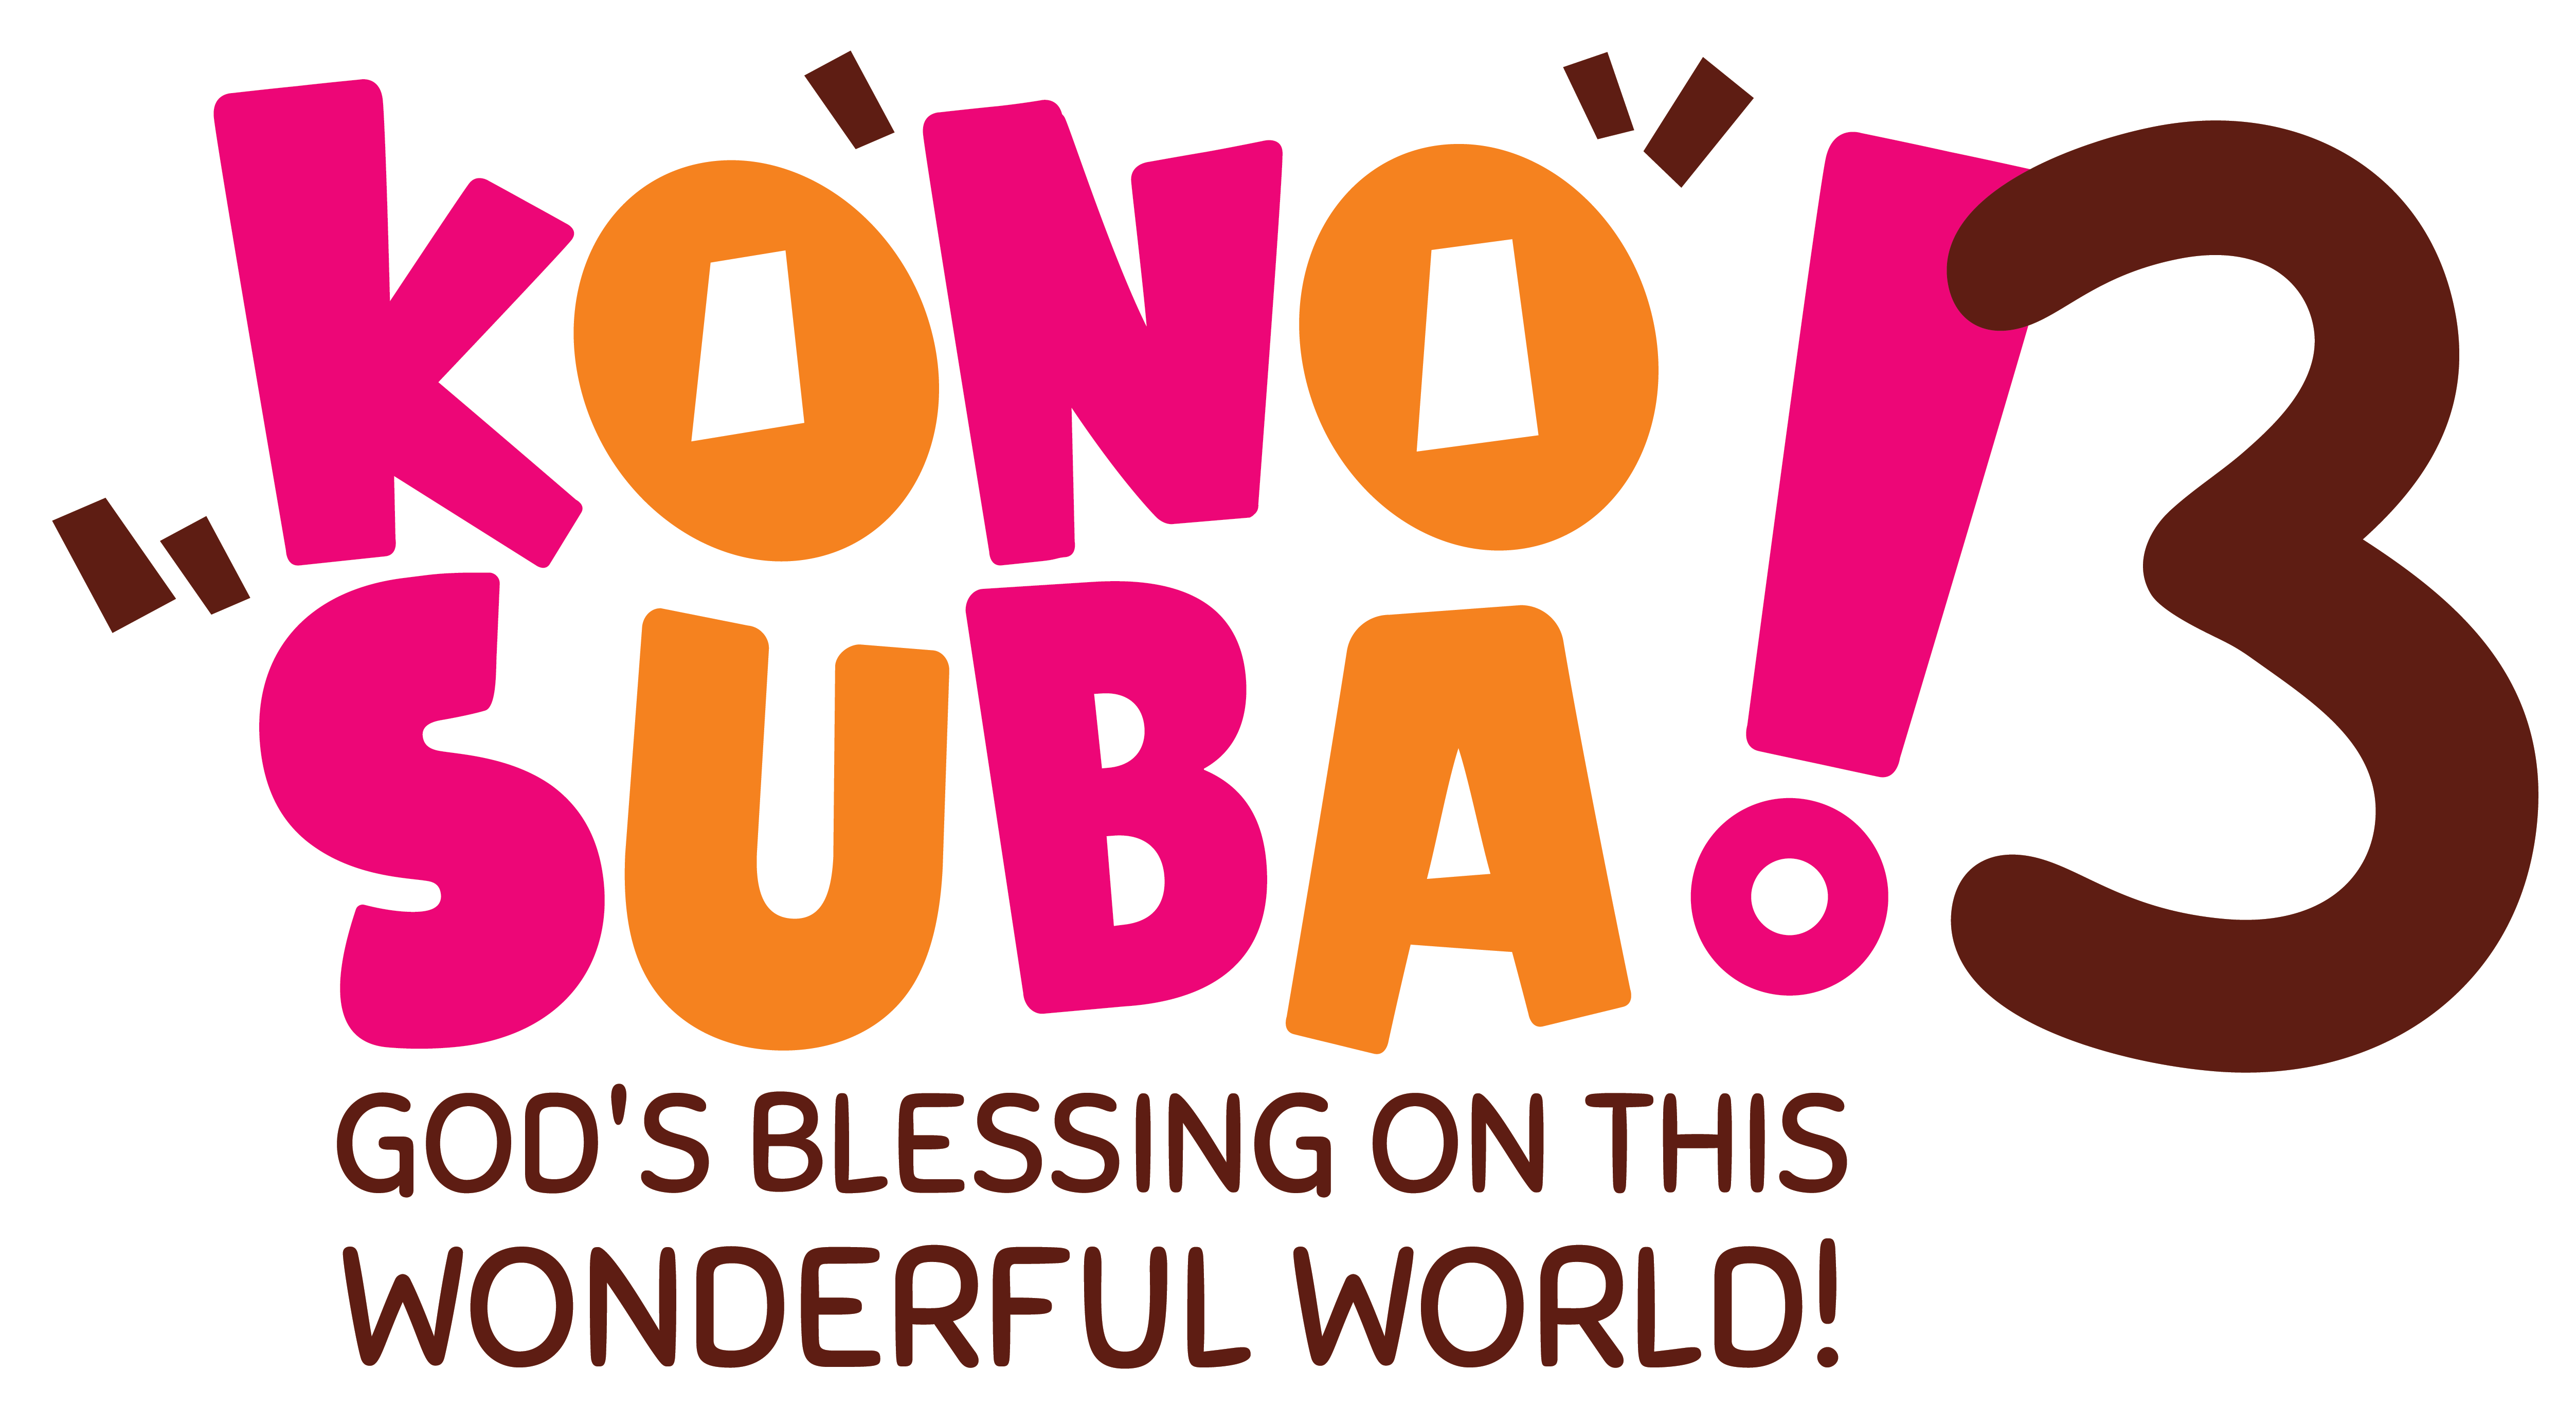 KONOSUBA -God's blessing on this wonderful world!